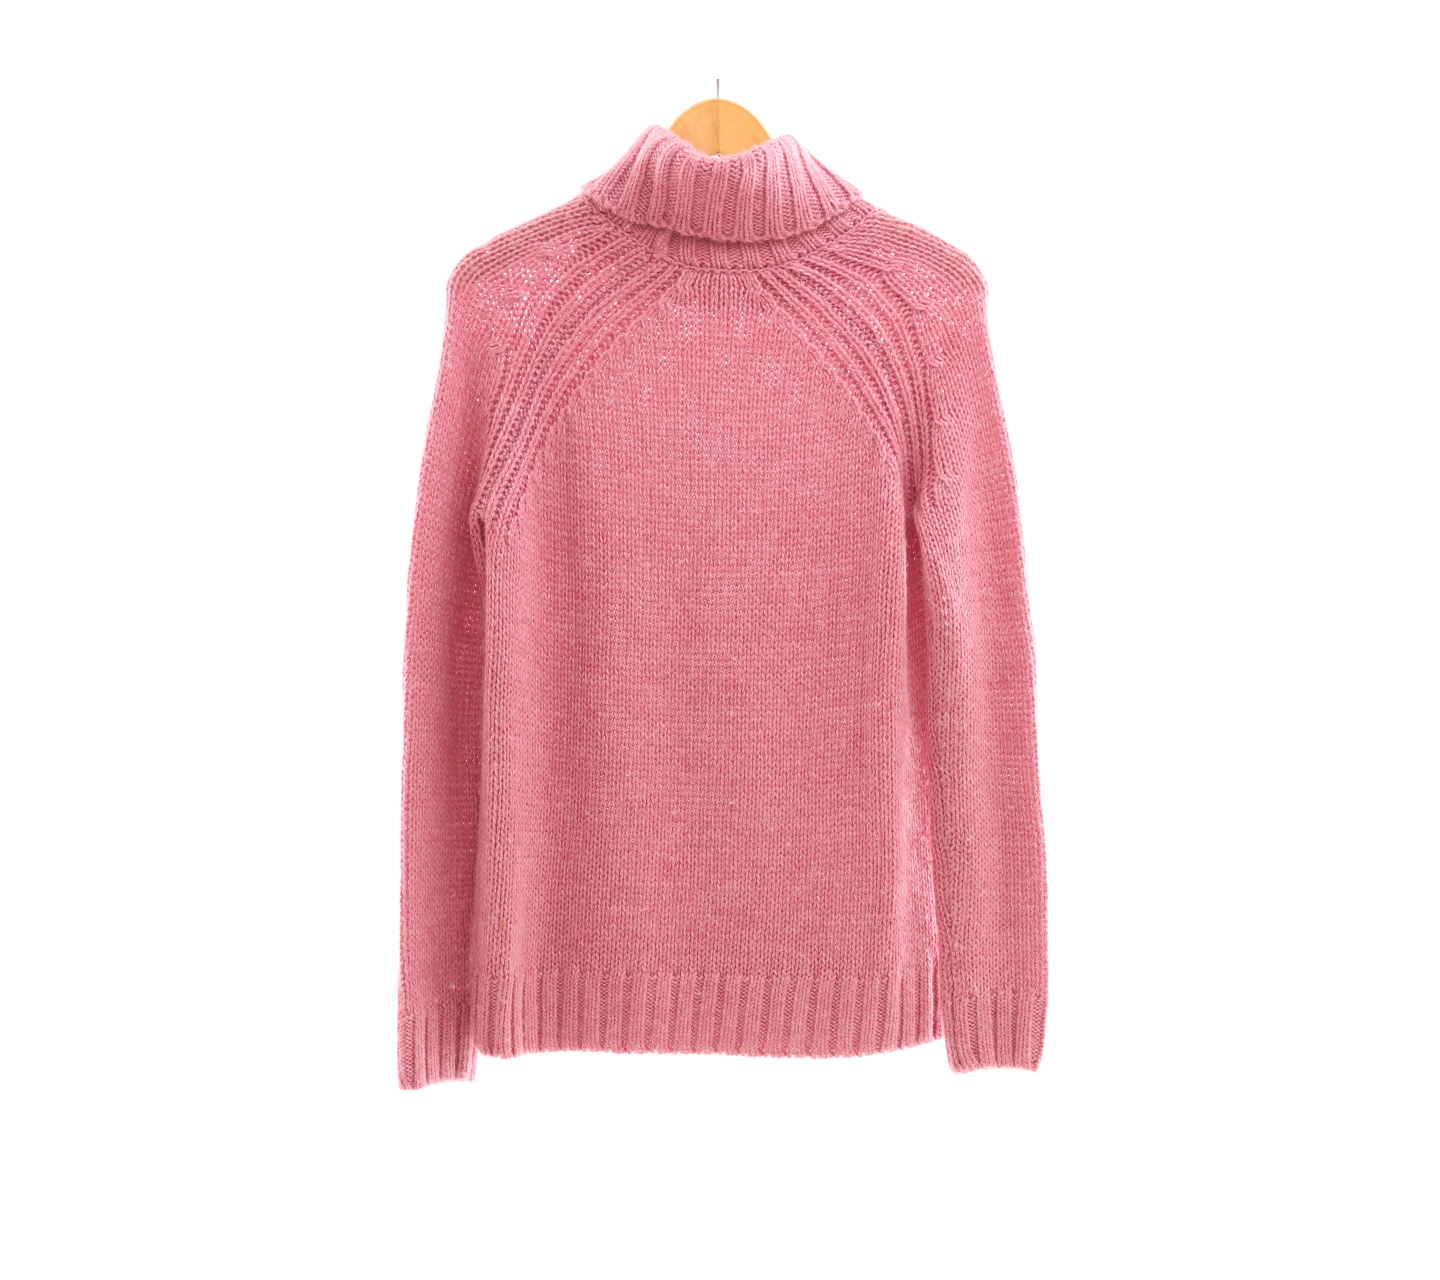 Marks & Spencer Pink Knited Turtle Neck Sweater